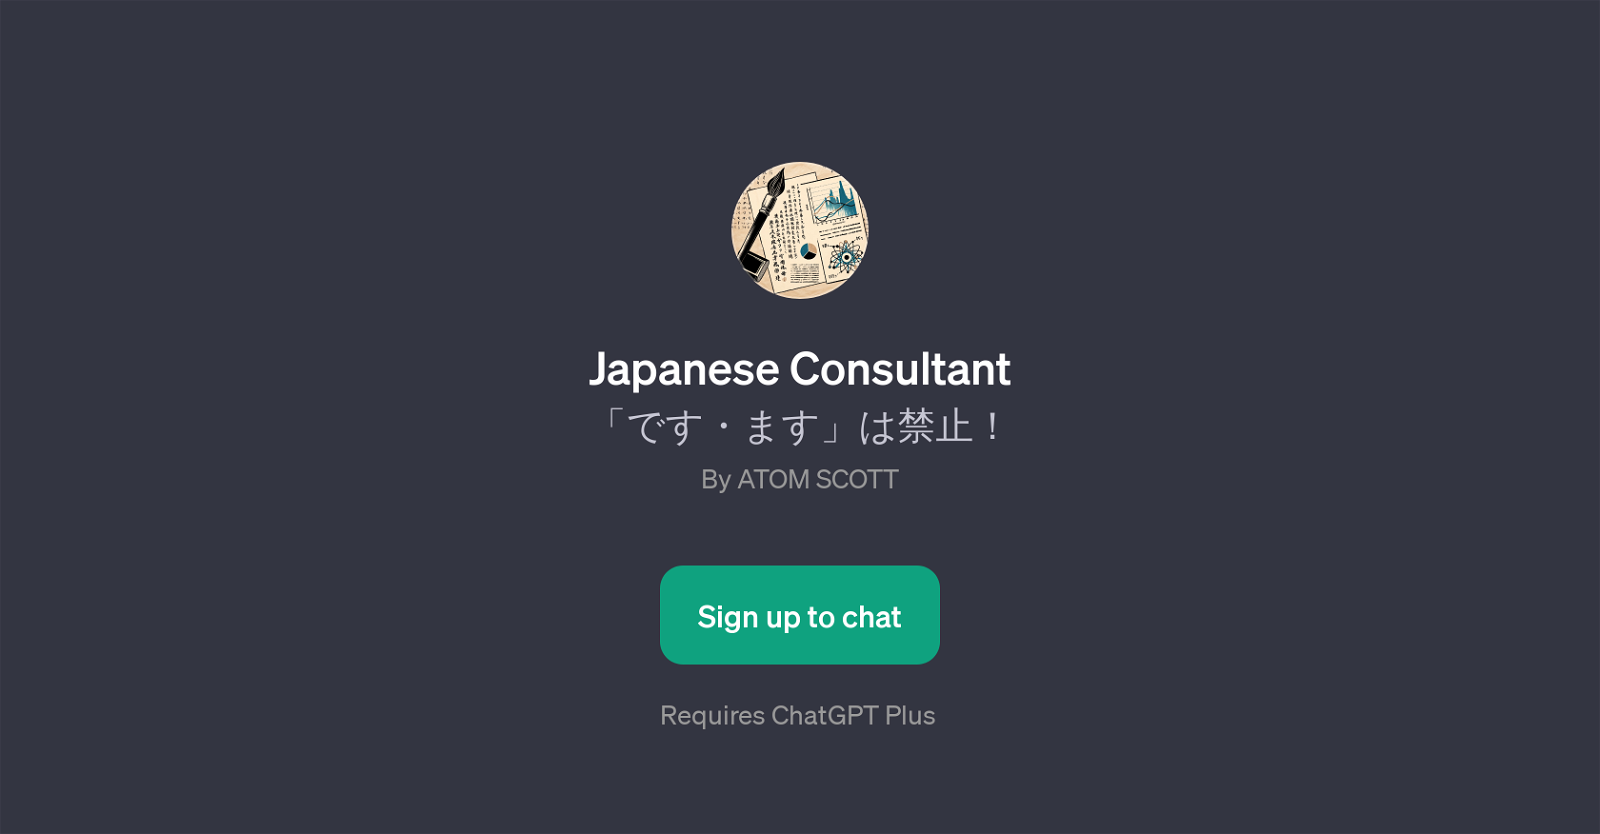 Japanese Consultant website